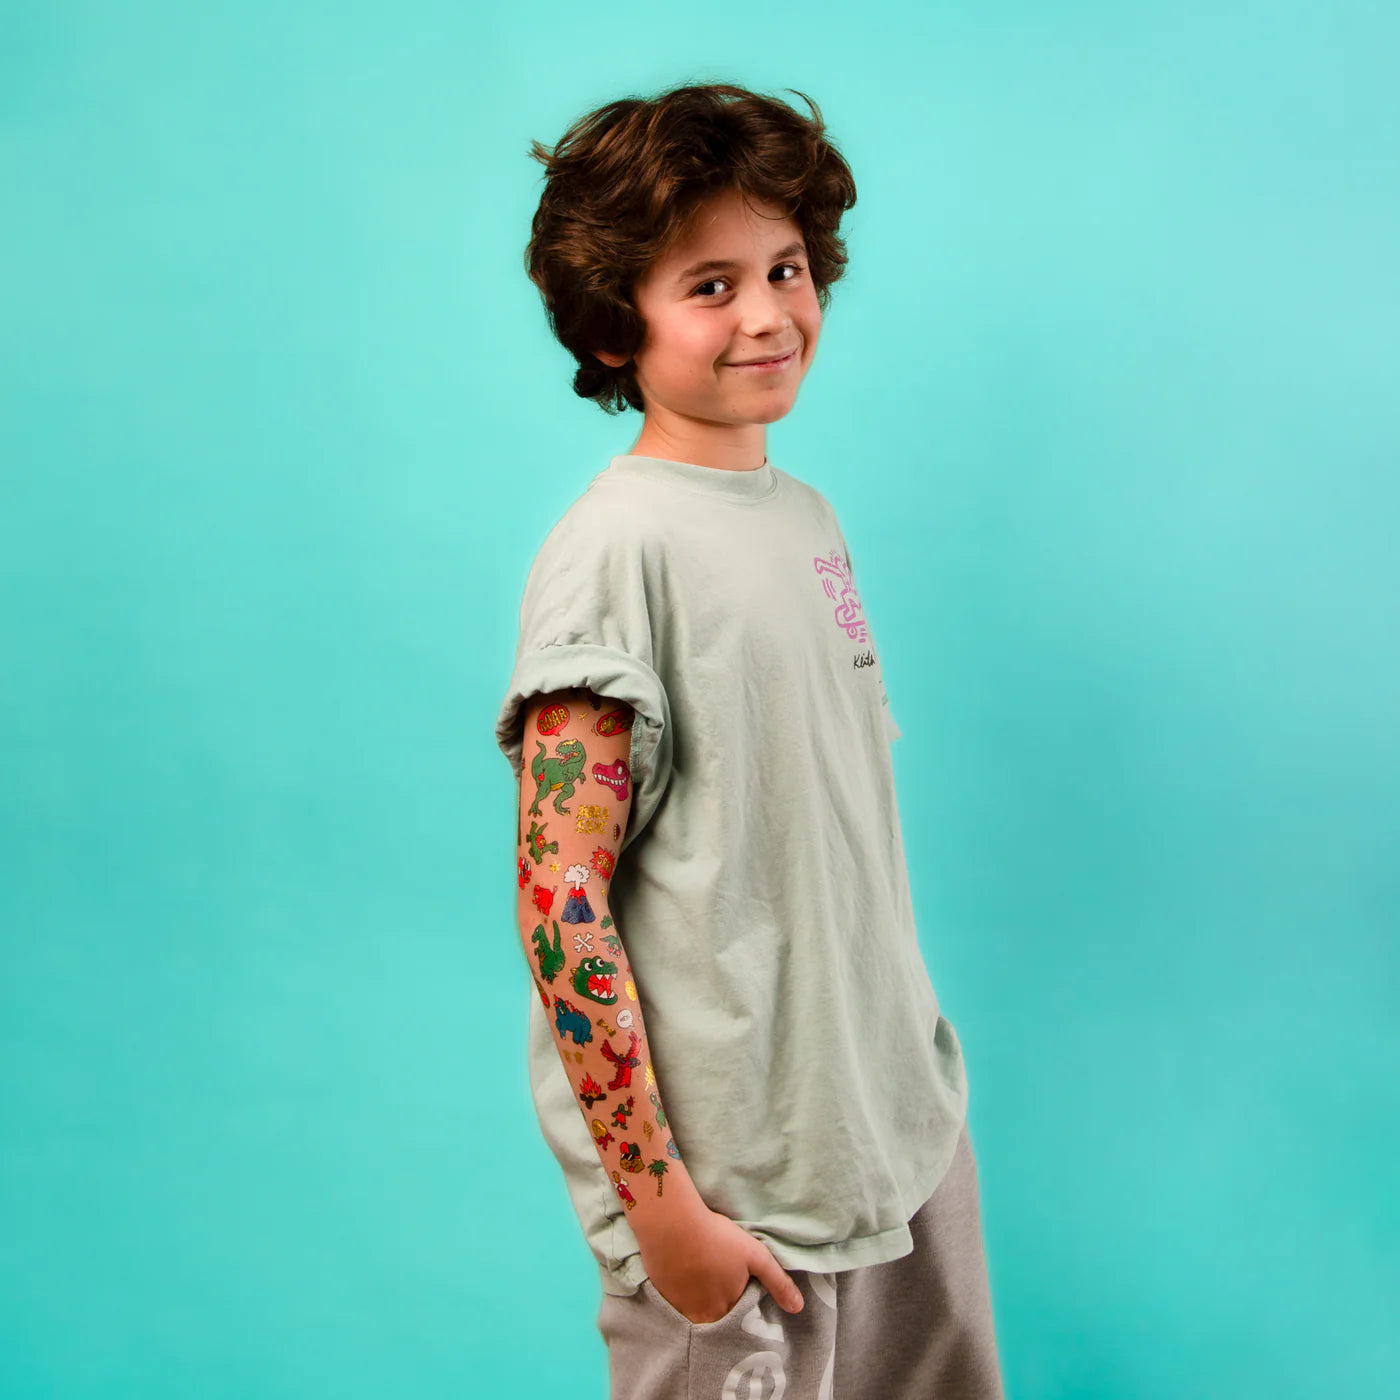 Omy - tattoos - dino